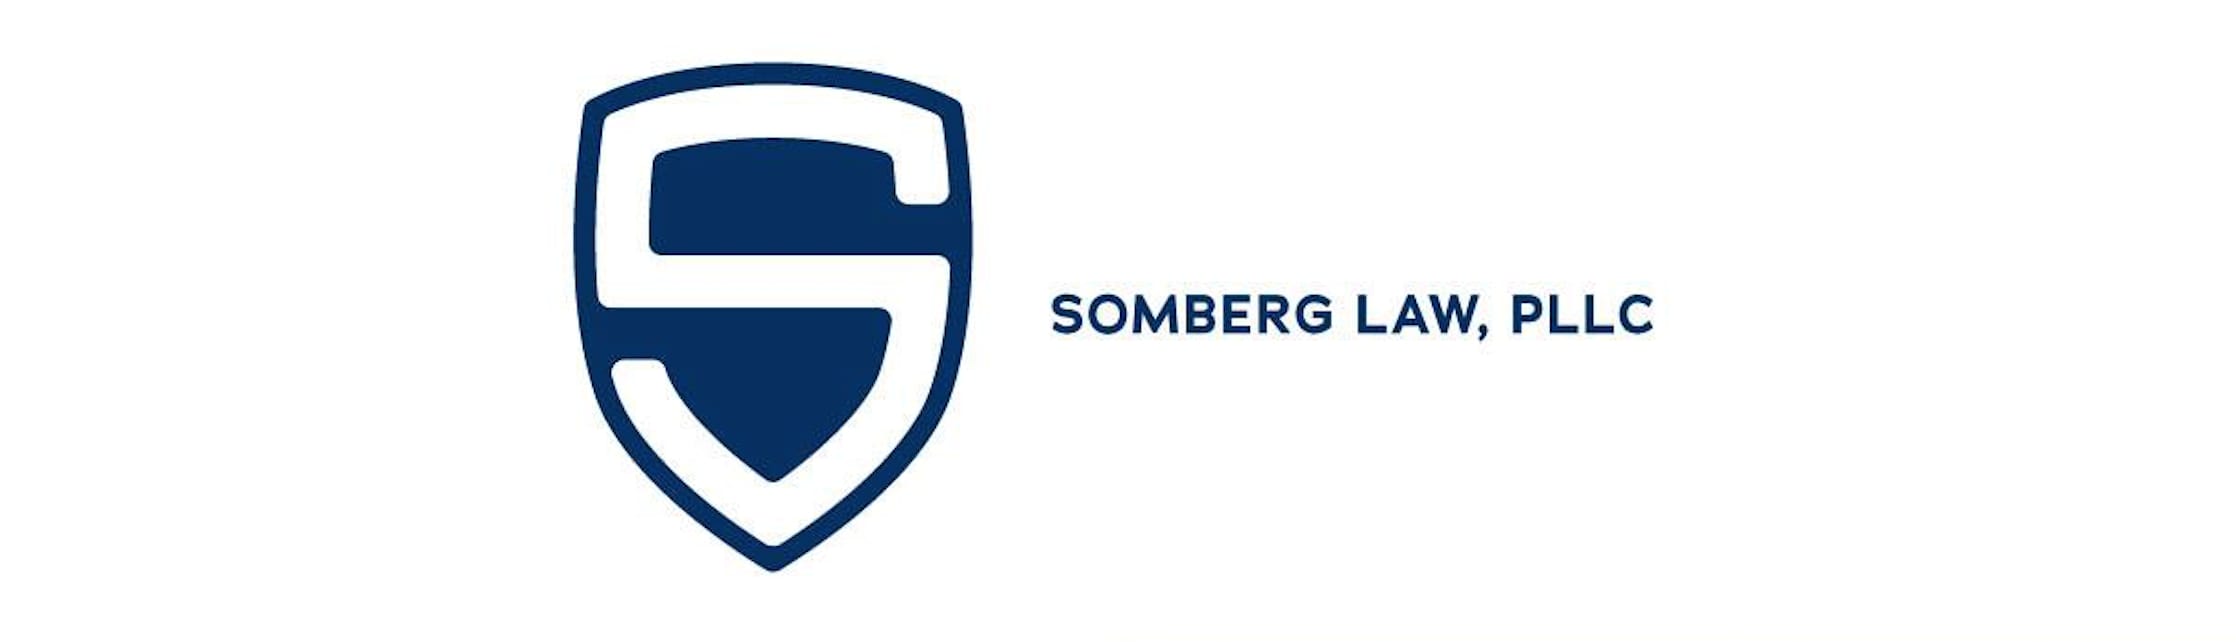 Somberg Law, PLLC